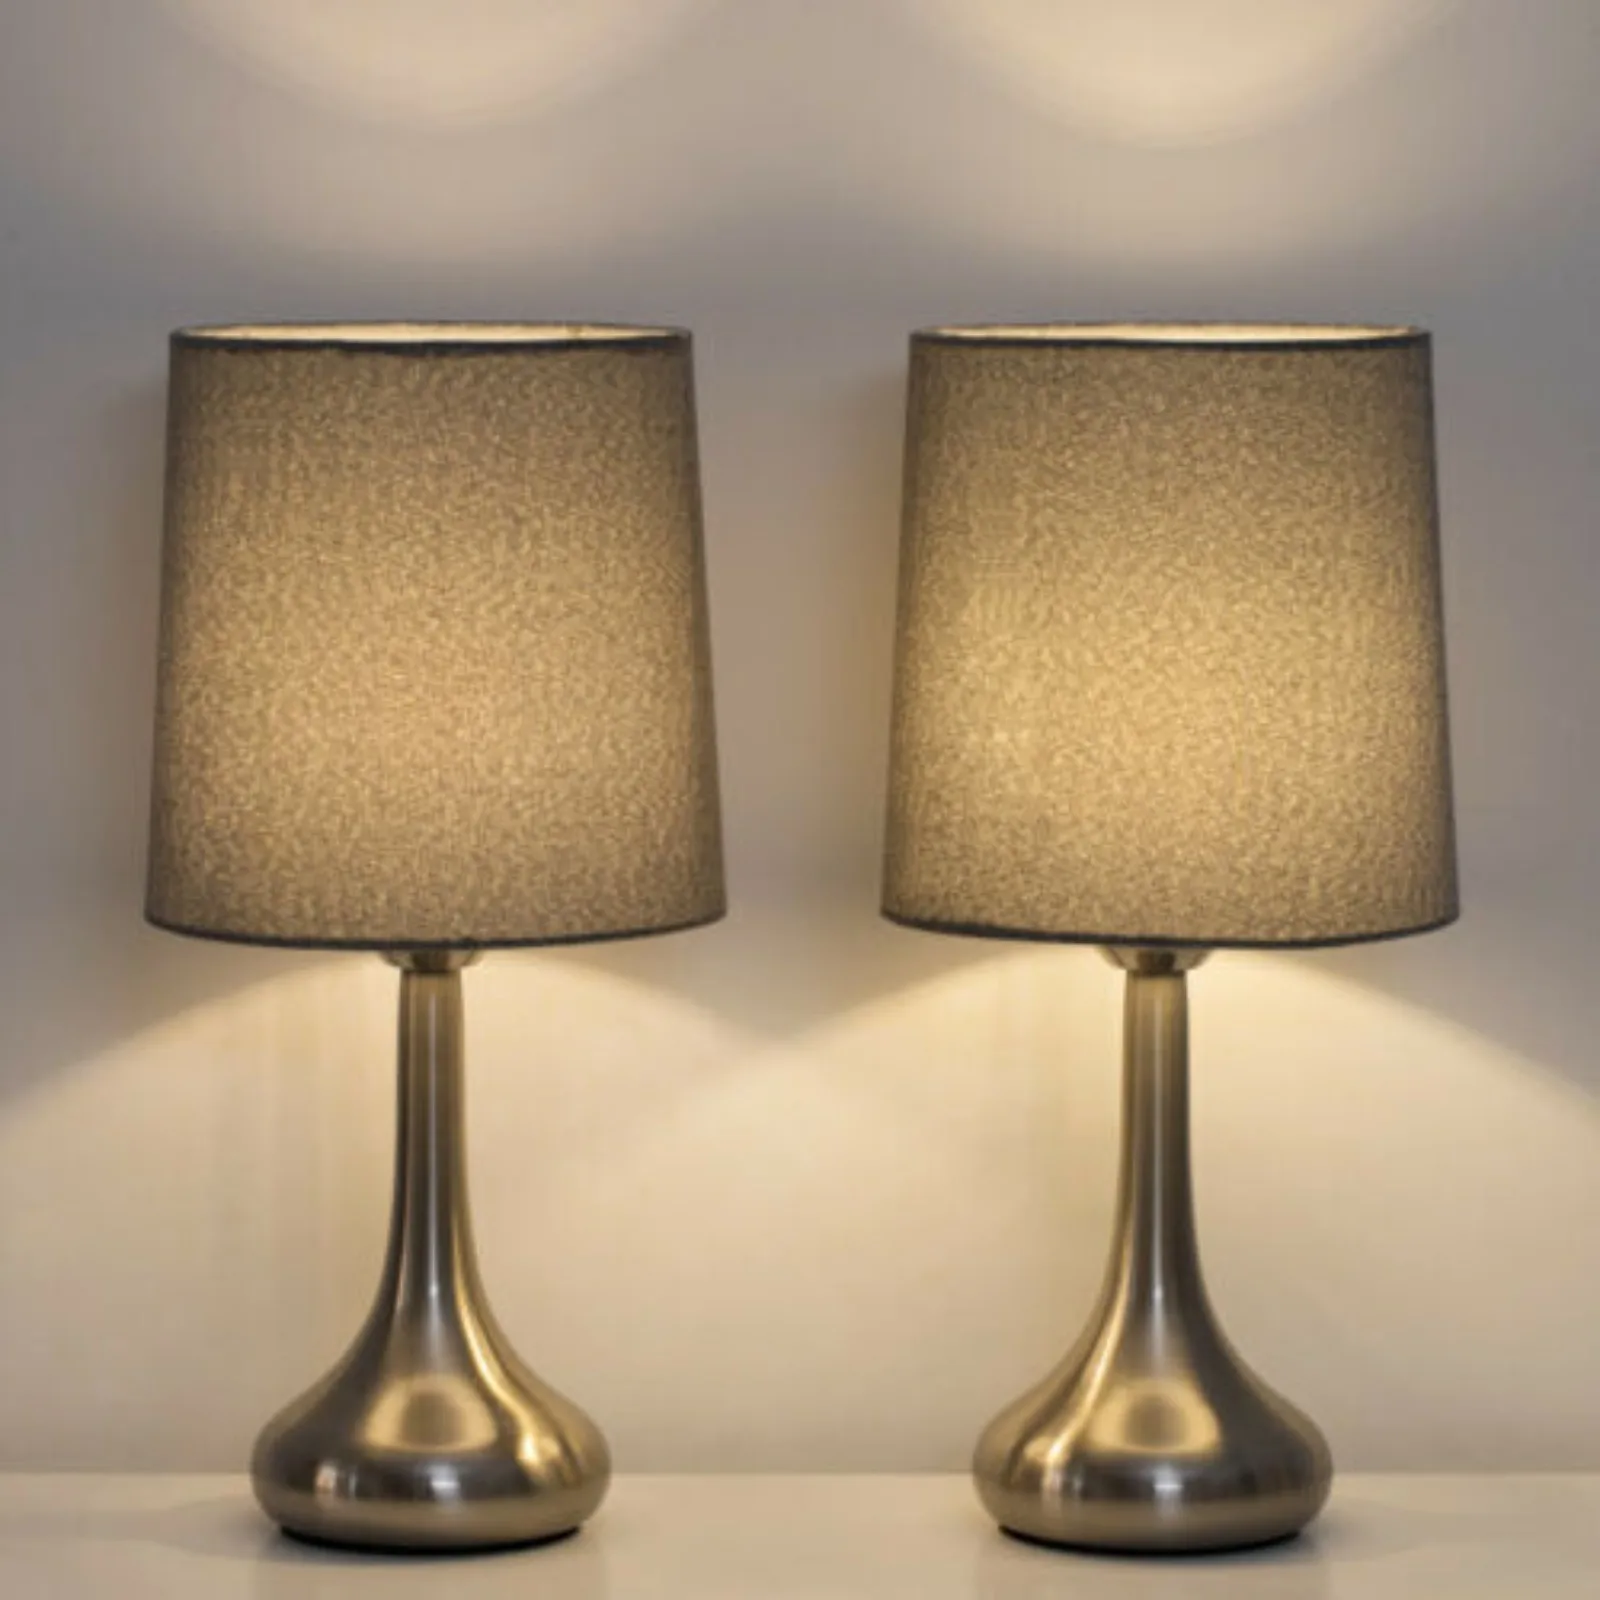 

Mcm Space Age Table Lamp Modern Designer Simple Desk Lamps for Living Room Bedroom Bedside Lamp Study Decor Illumination Light